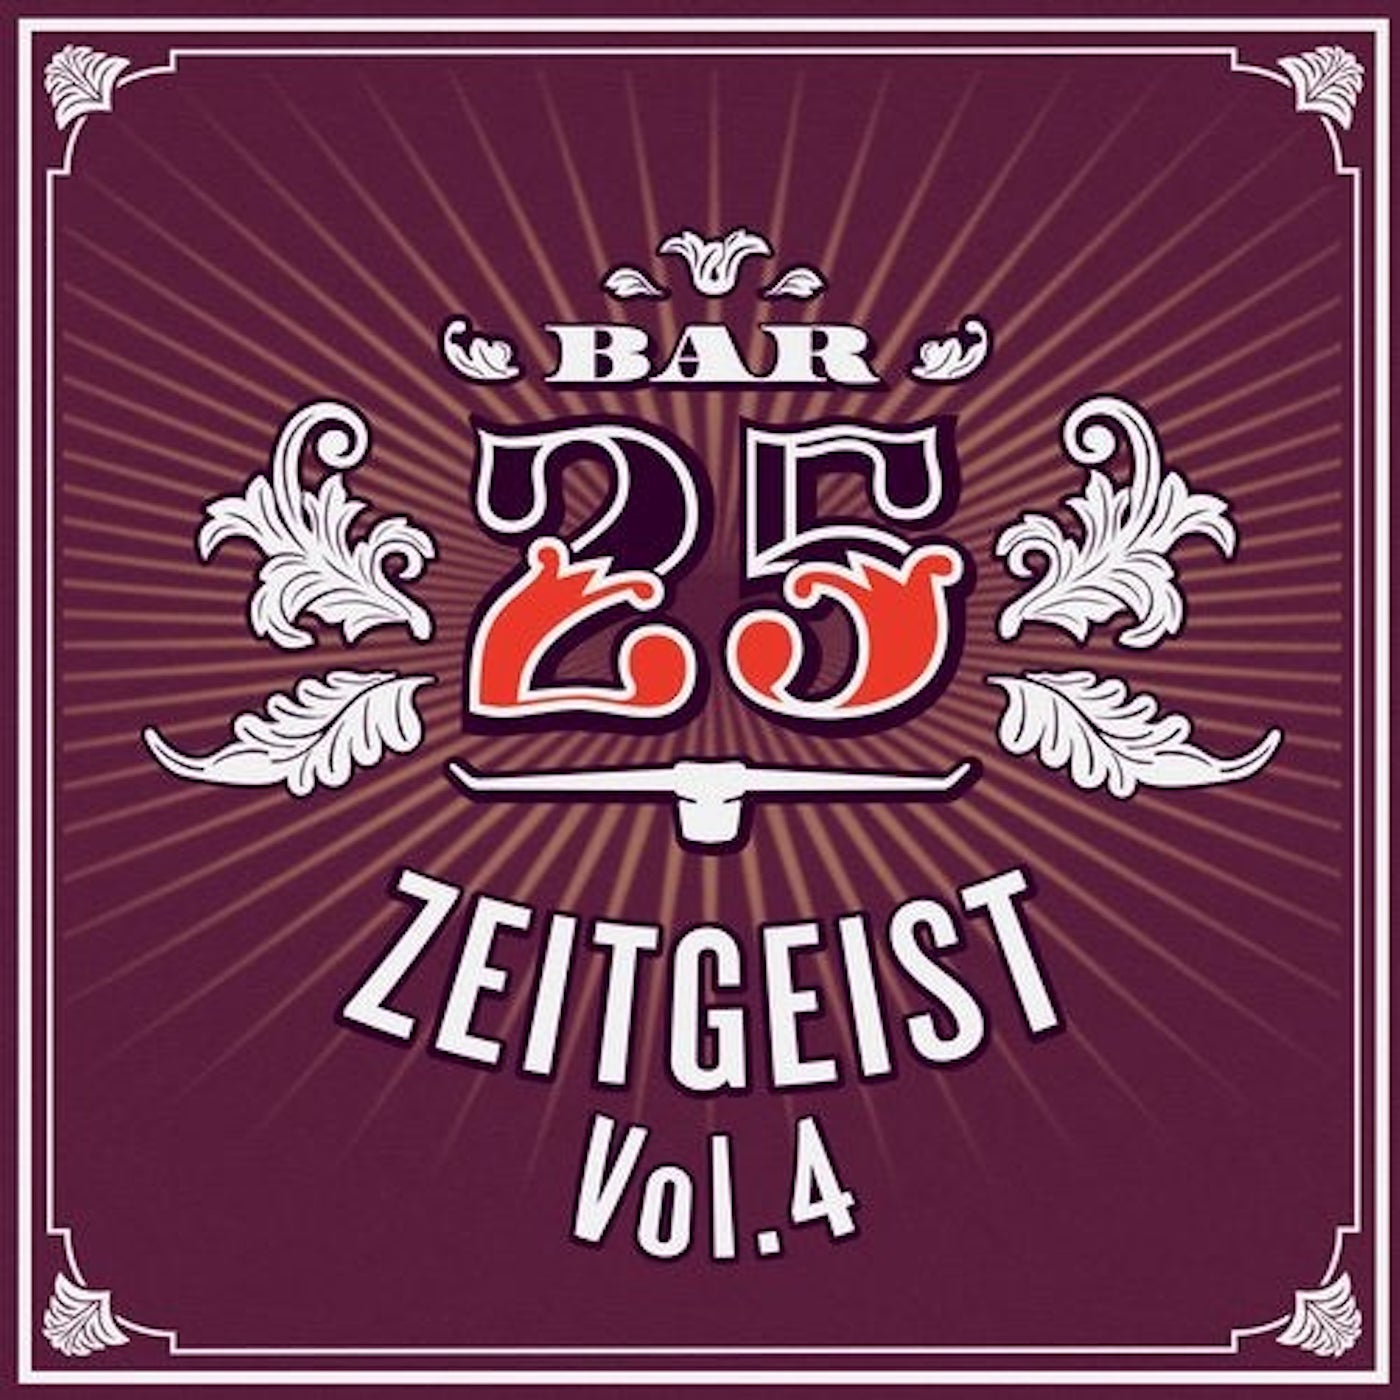 Bar25 - Zeitgeist, Vol. 4